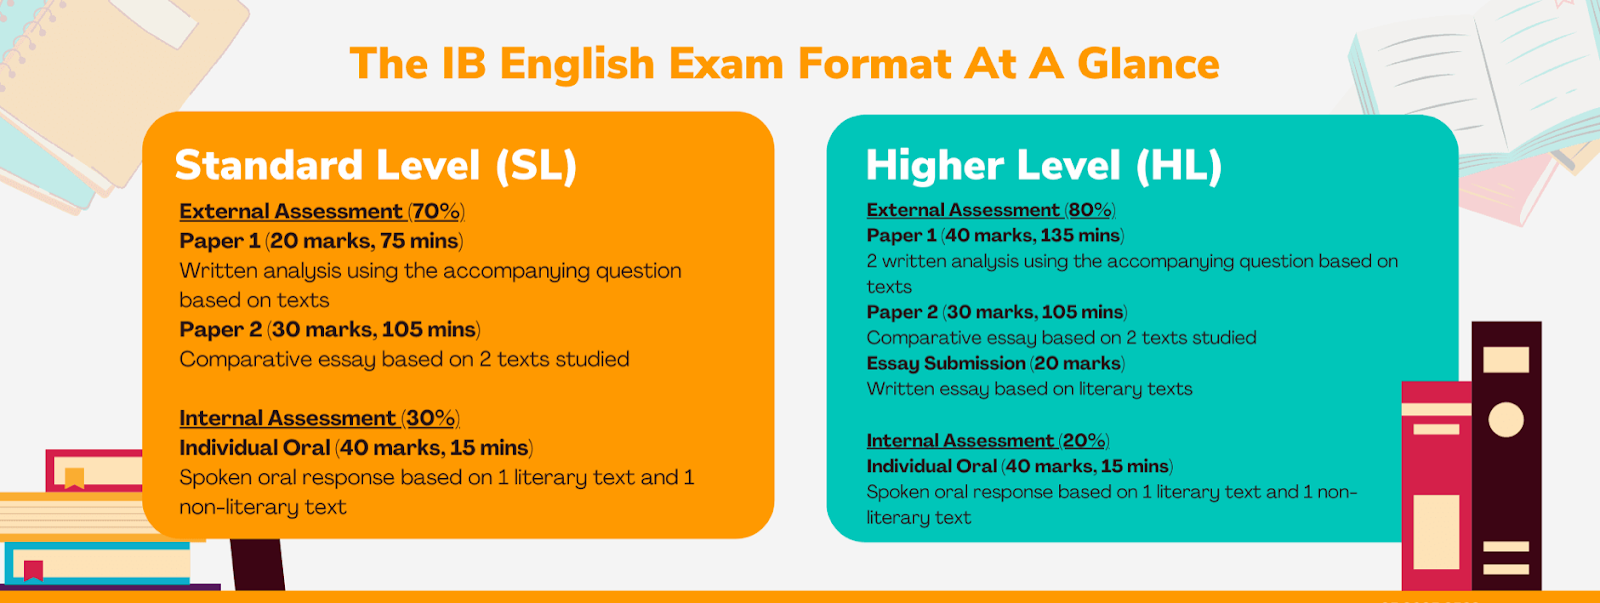 The IB English Exam Format At A Glance